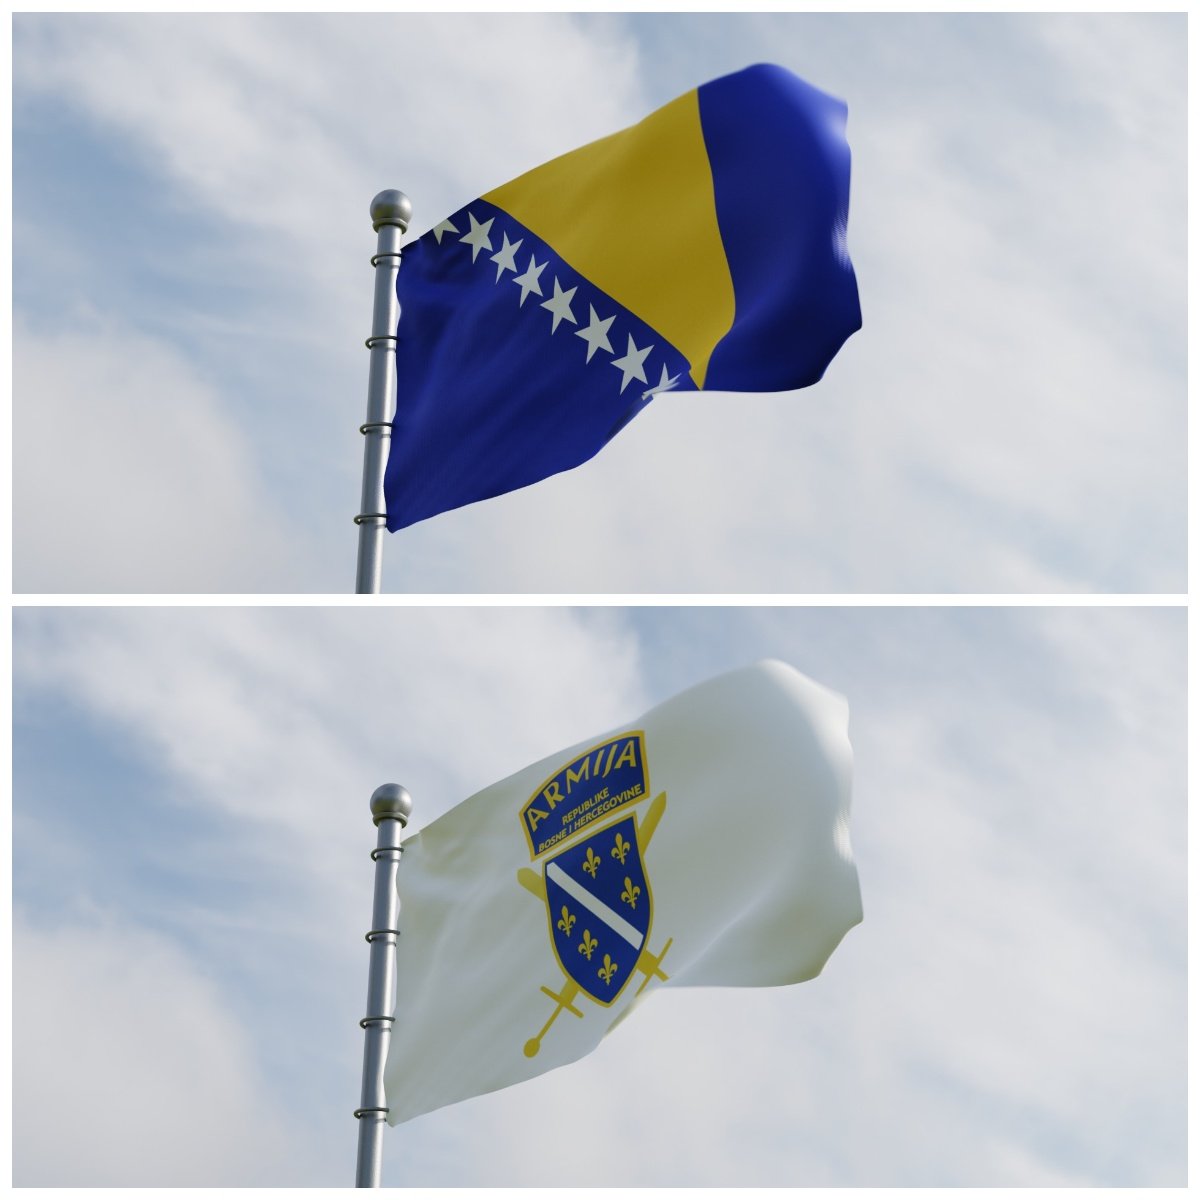 bosnian flag waving